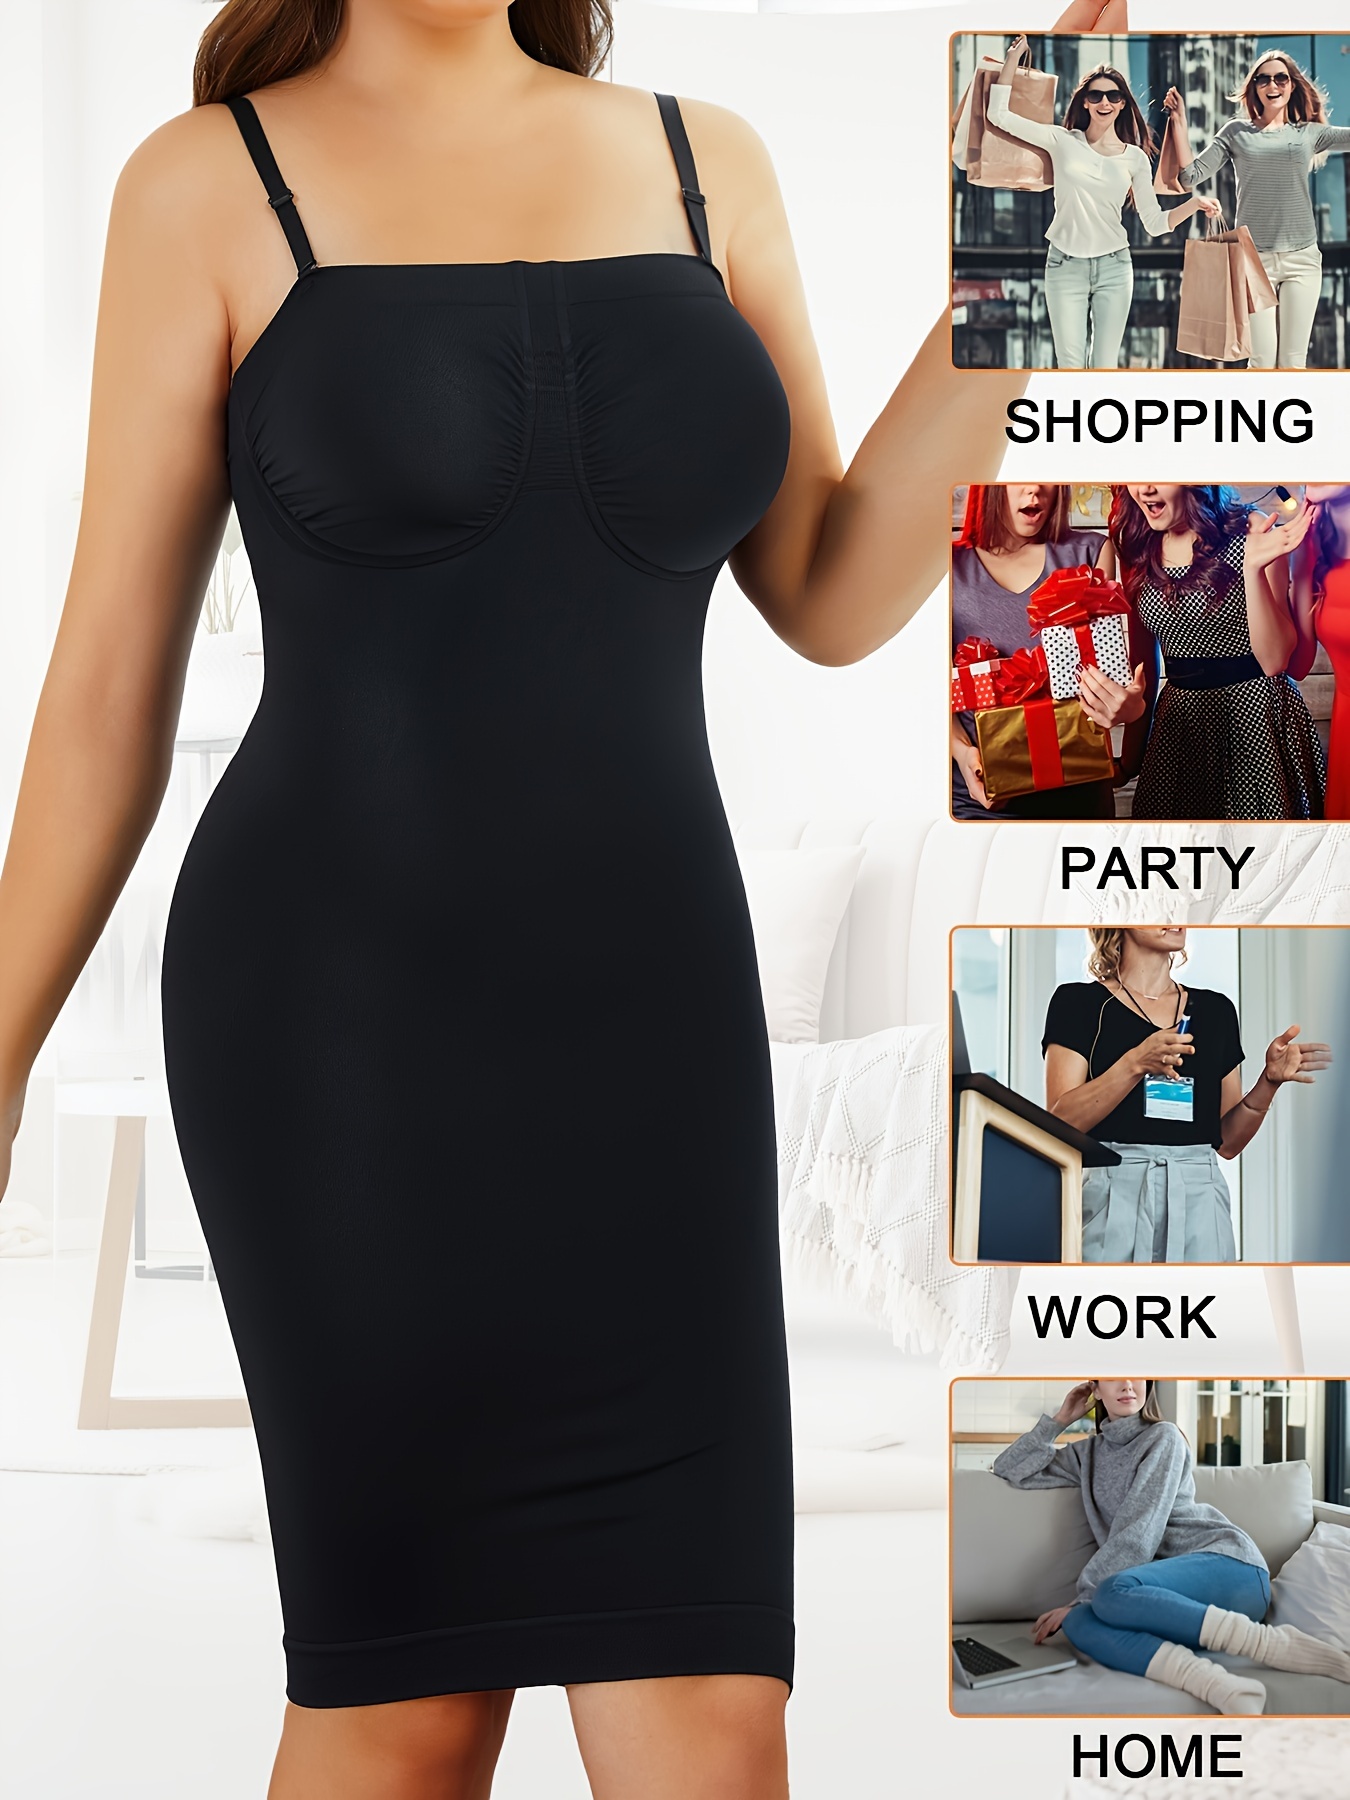 Buy Women Control Full Slip Dress Body Shaper Smoother Smooth Slim